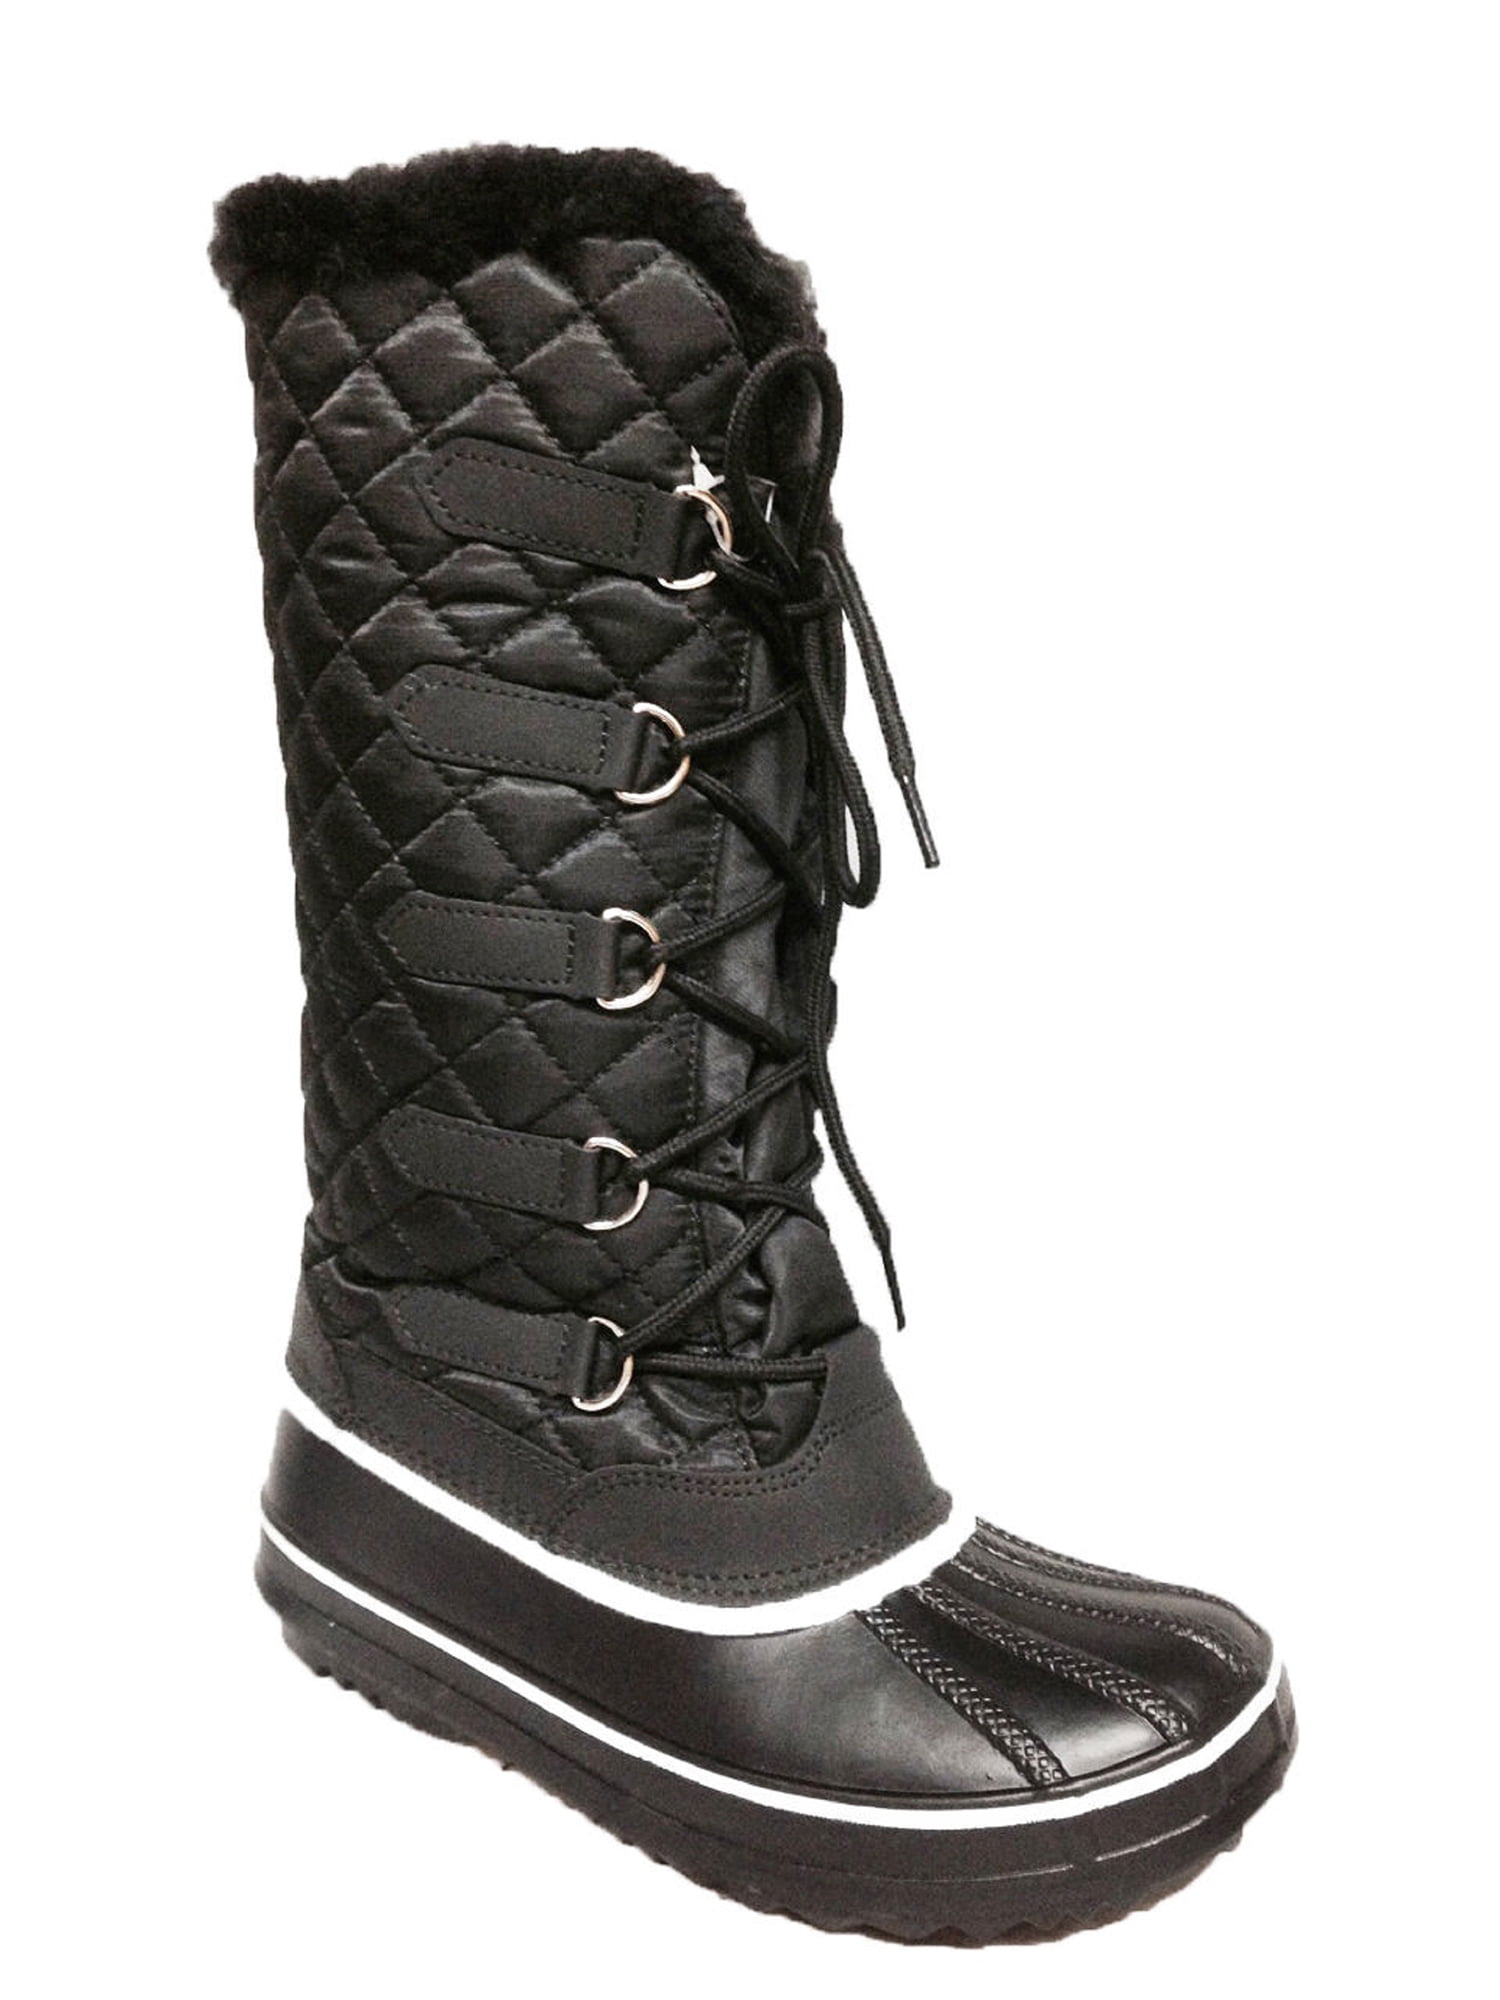 Tanleewa Waterproof Women Winter Snow Boots Fashion Warm Faux Fur Lined Shoes Lace Up Nonslip